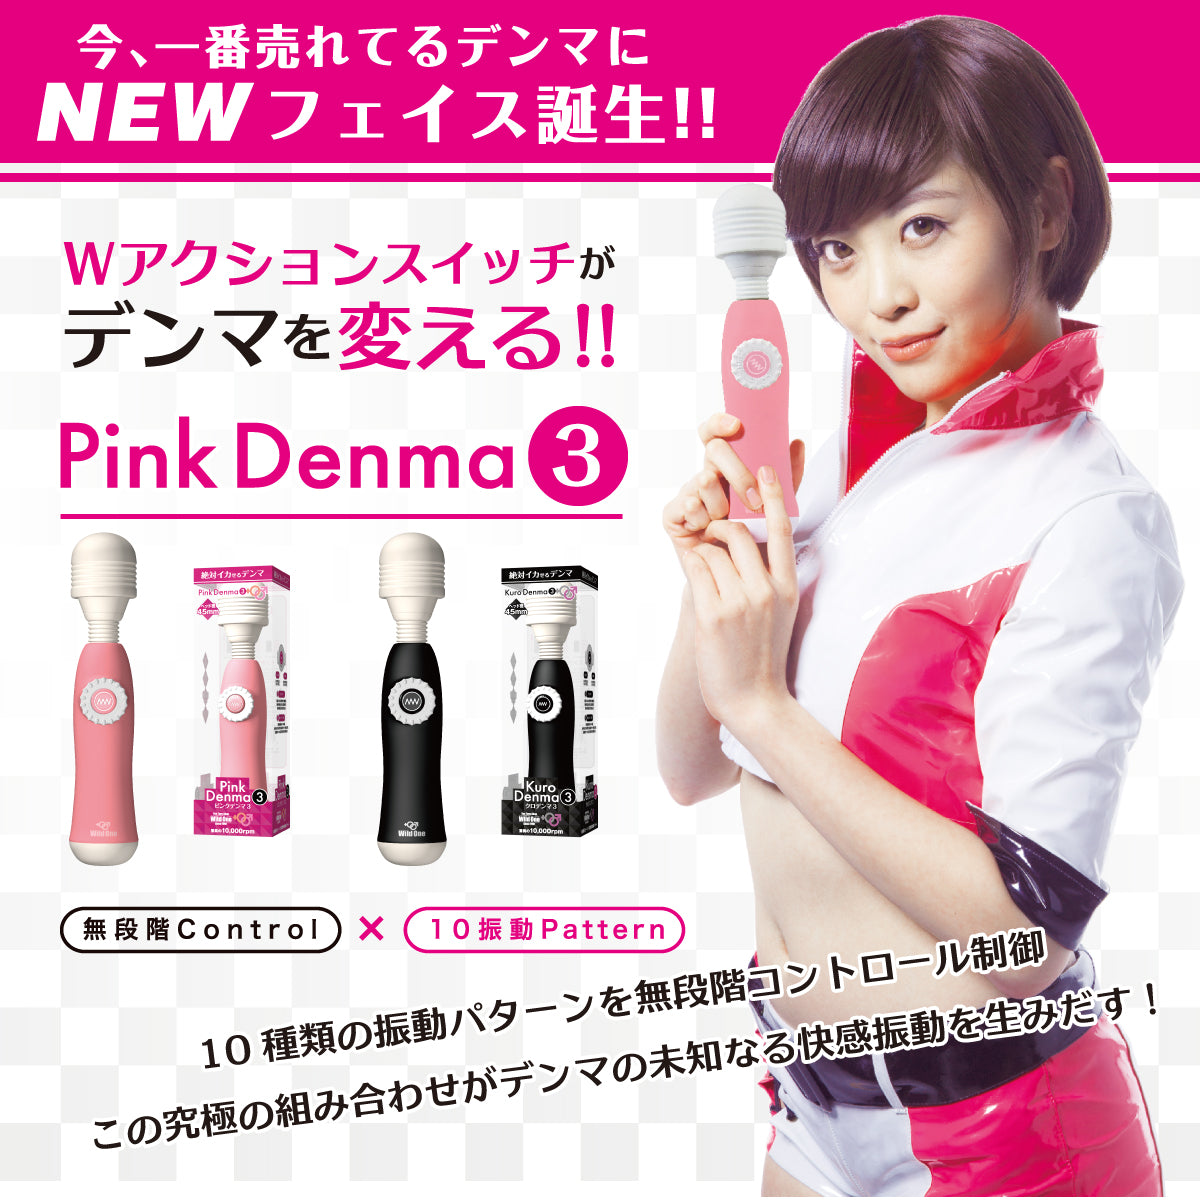 Pink Denma 3 絕對潮吹按摩棒第3代 粉紅色